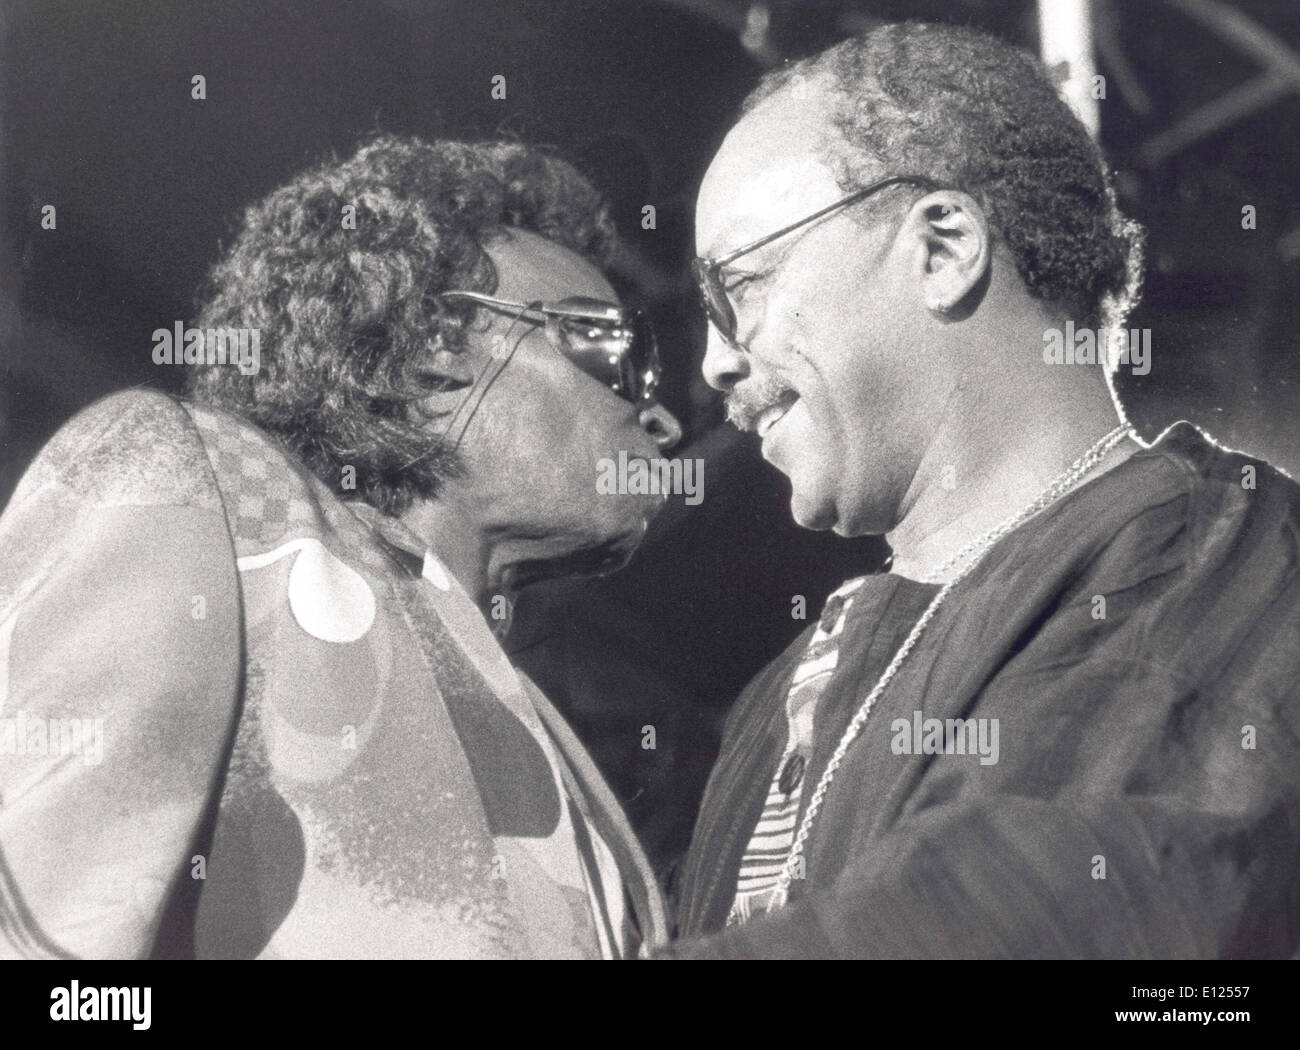 Jazz legend MILES DAVIS and QUINCY JONES at the Montreux Jazz Festival Stock Photo